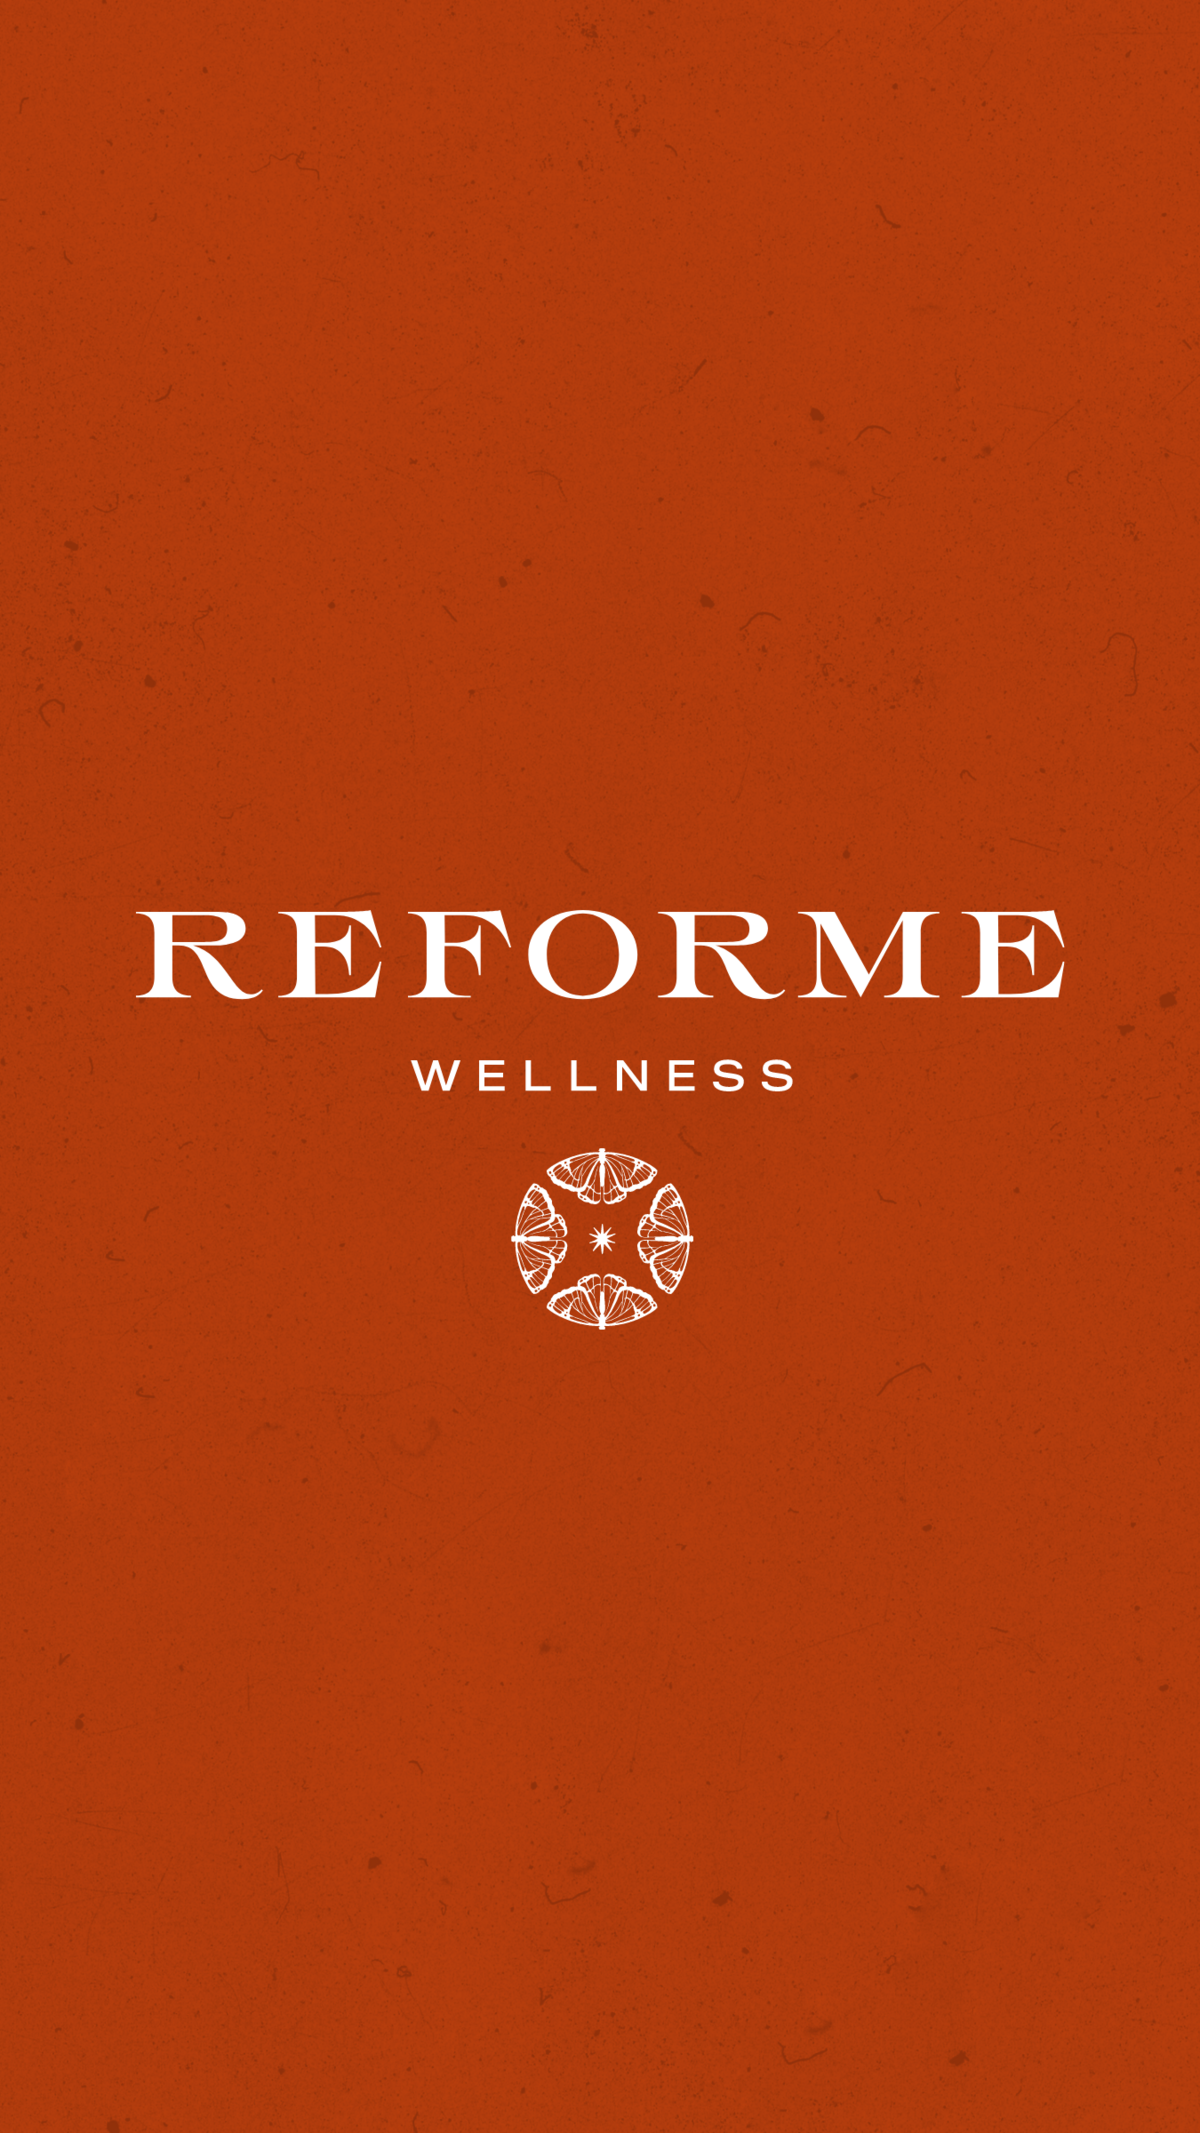 Reforme - Mystical Semi Custom Brand Template by Sarah Ann Design - 51